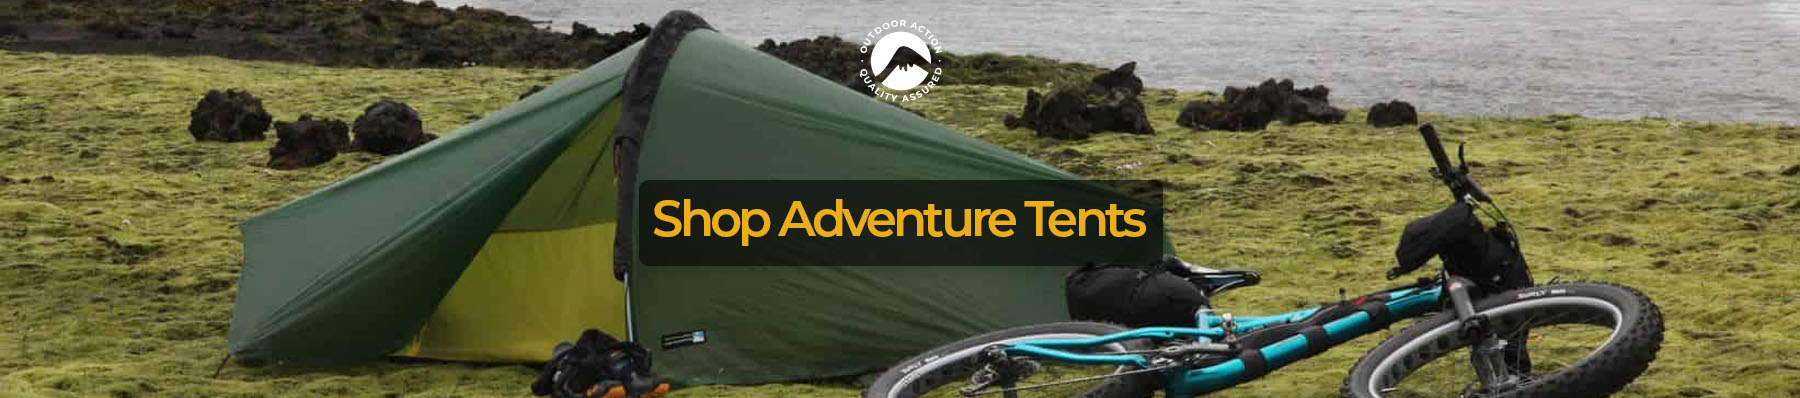 Shop Adventure Tents online at Outdoor Action